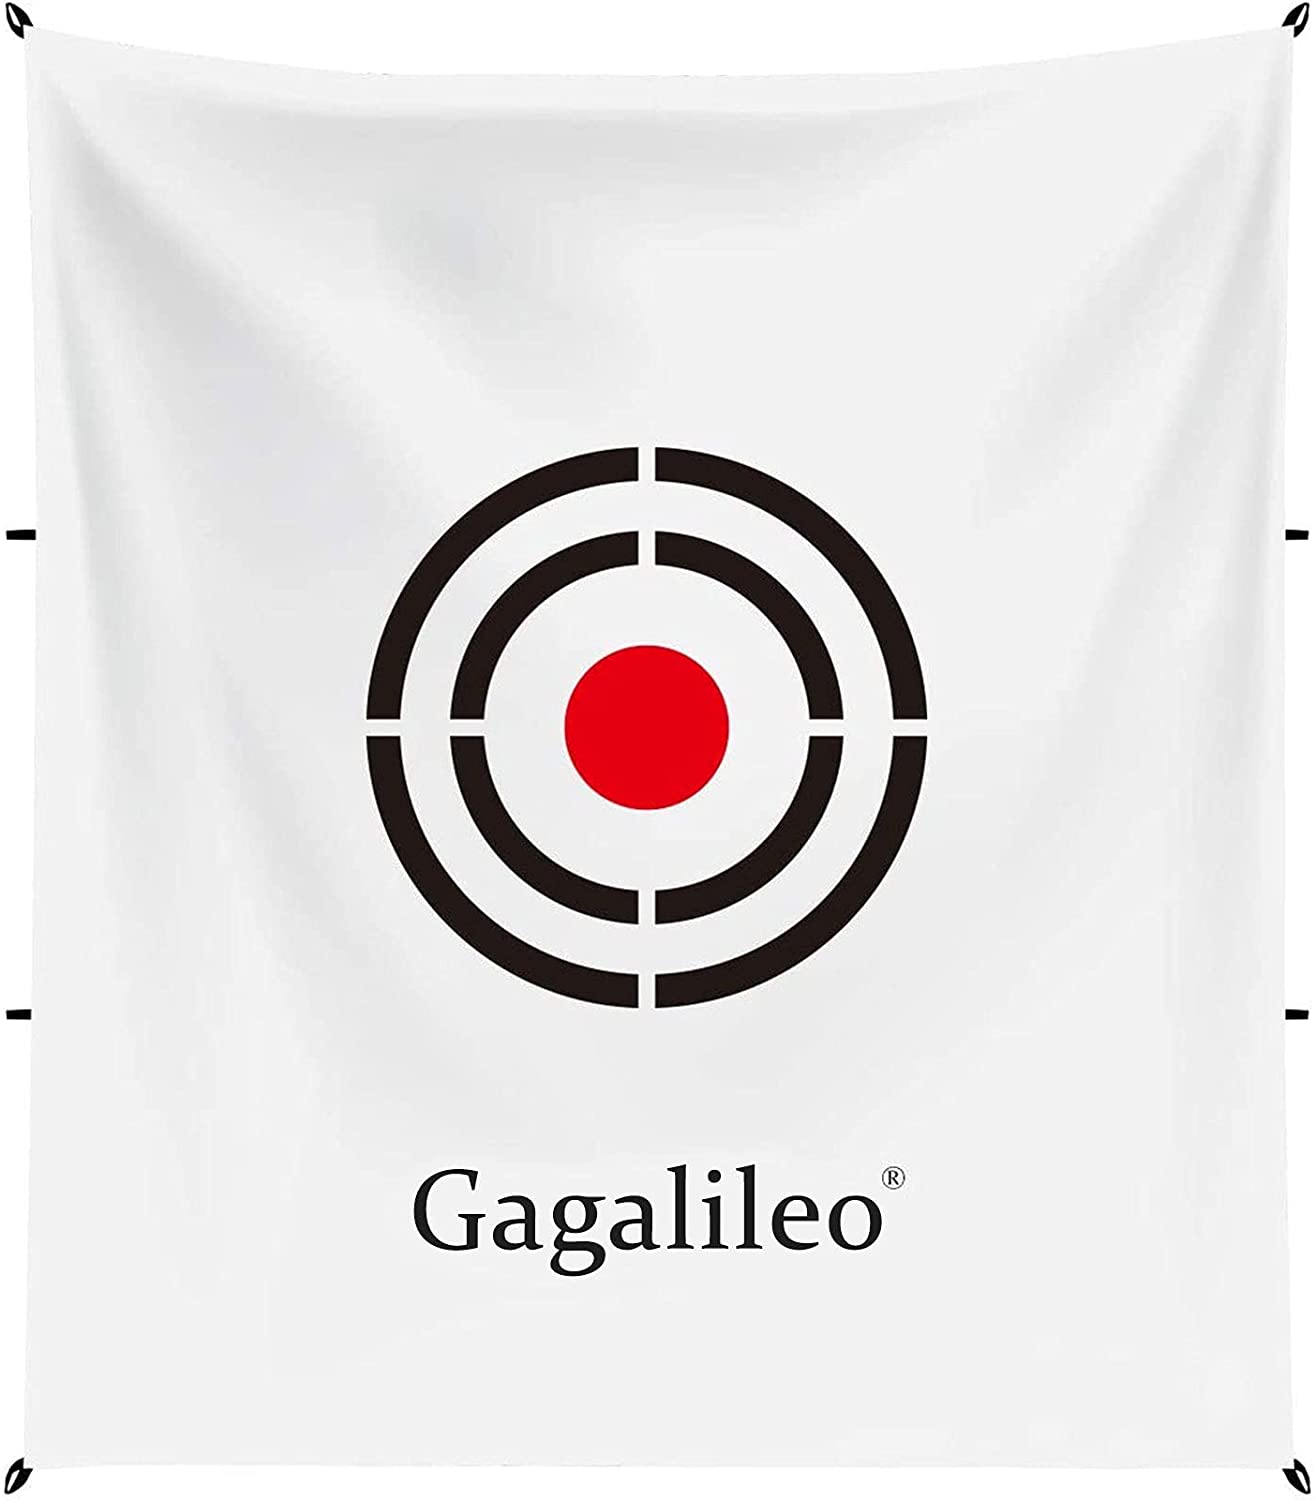 5x6 Galileo Übungs-Backstop-Ziel/Schwarzer Kreisstil/Weiß